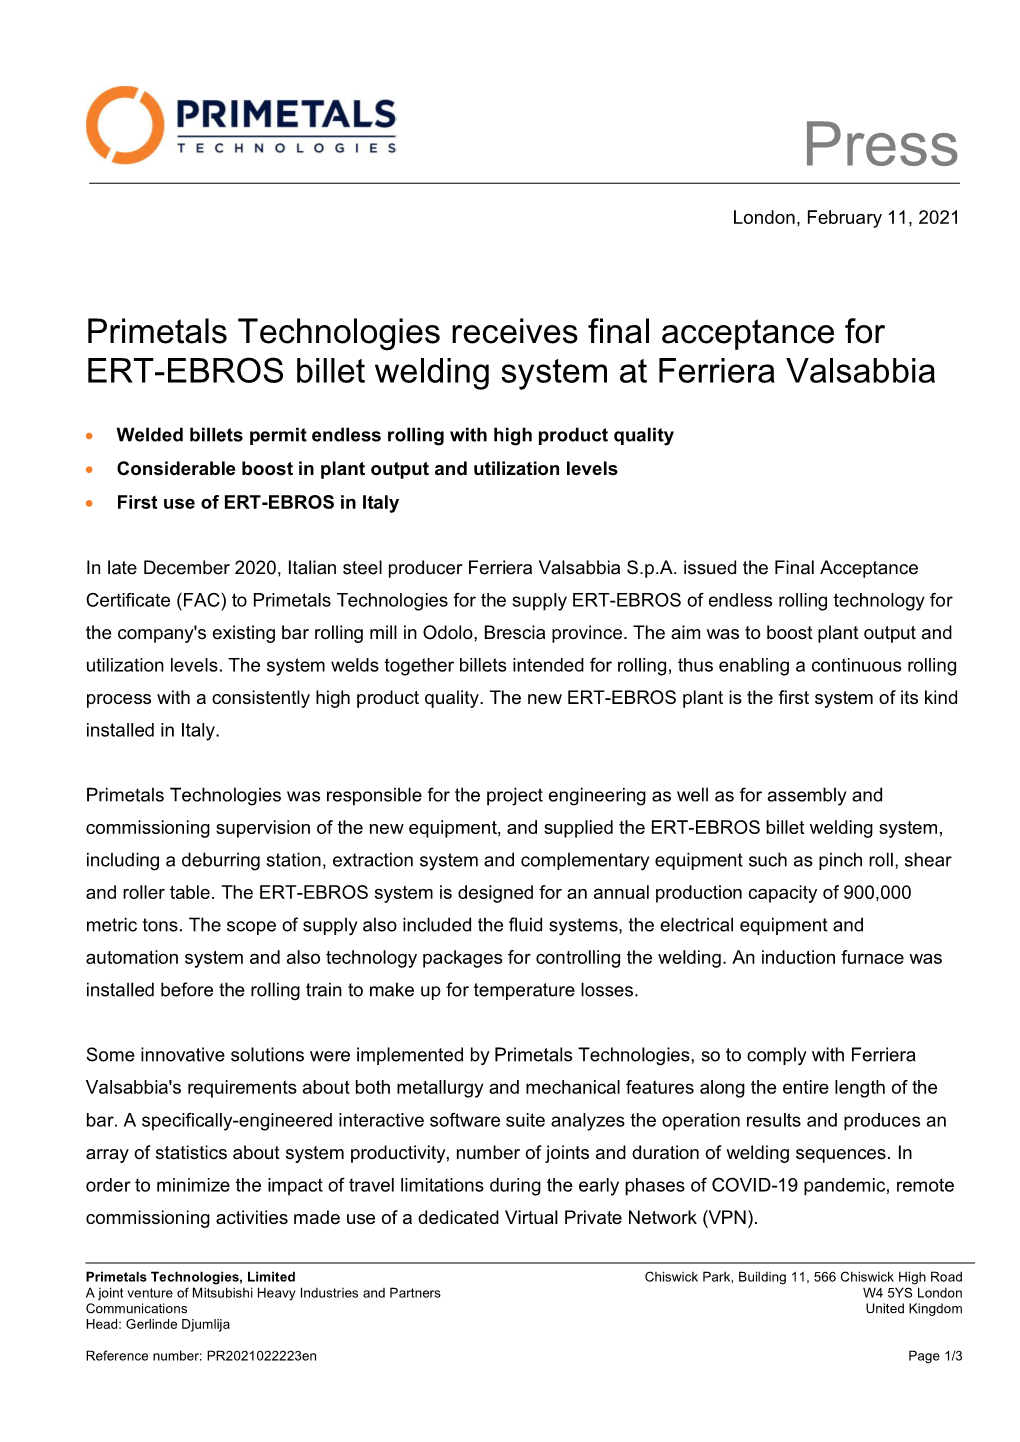 Primetals Technologies Receives Final Acceptance for ERT-EBROS Billet Welding System at Ferriera Valsabbia